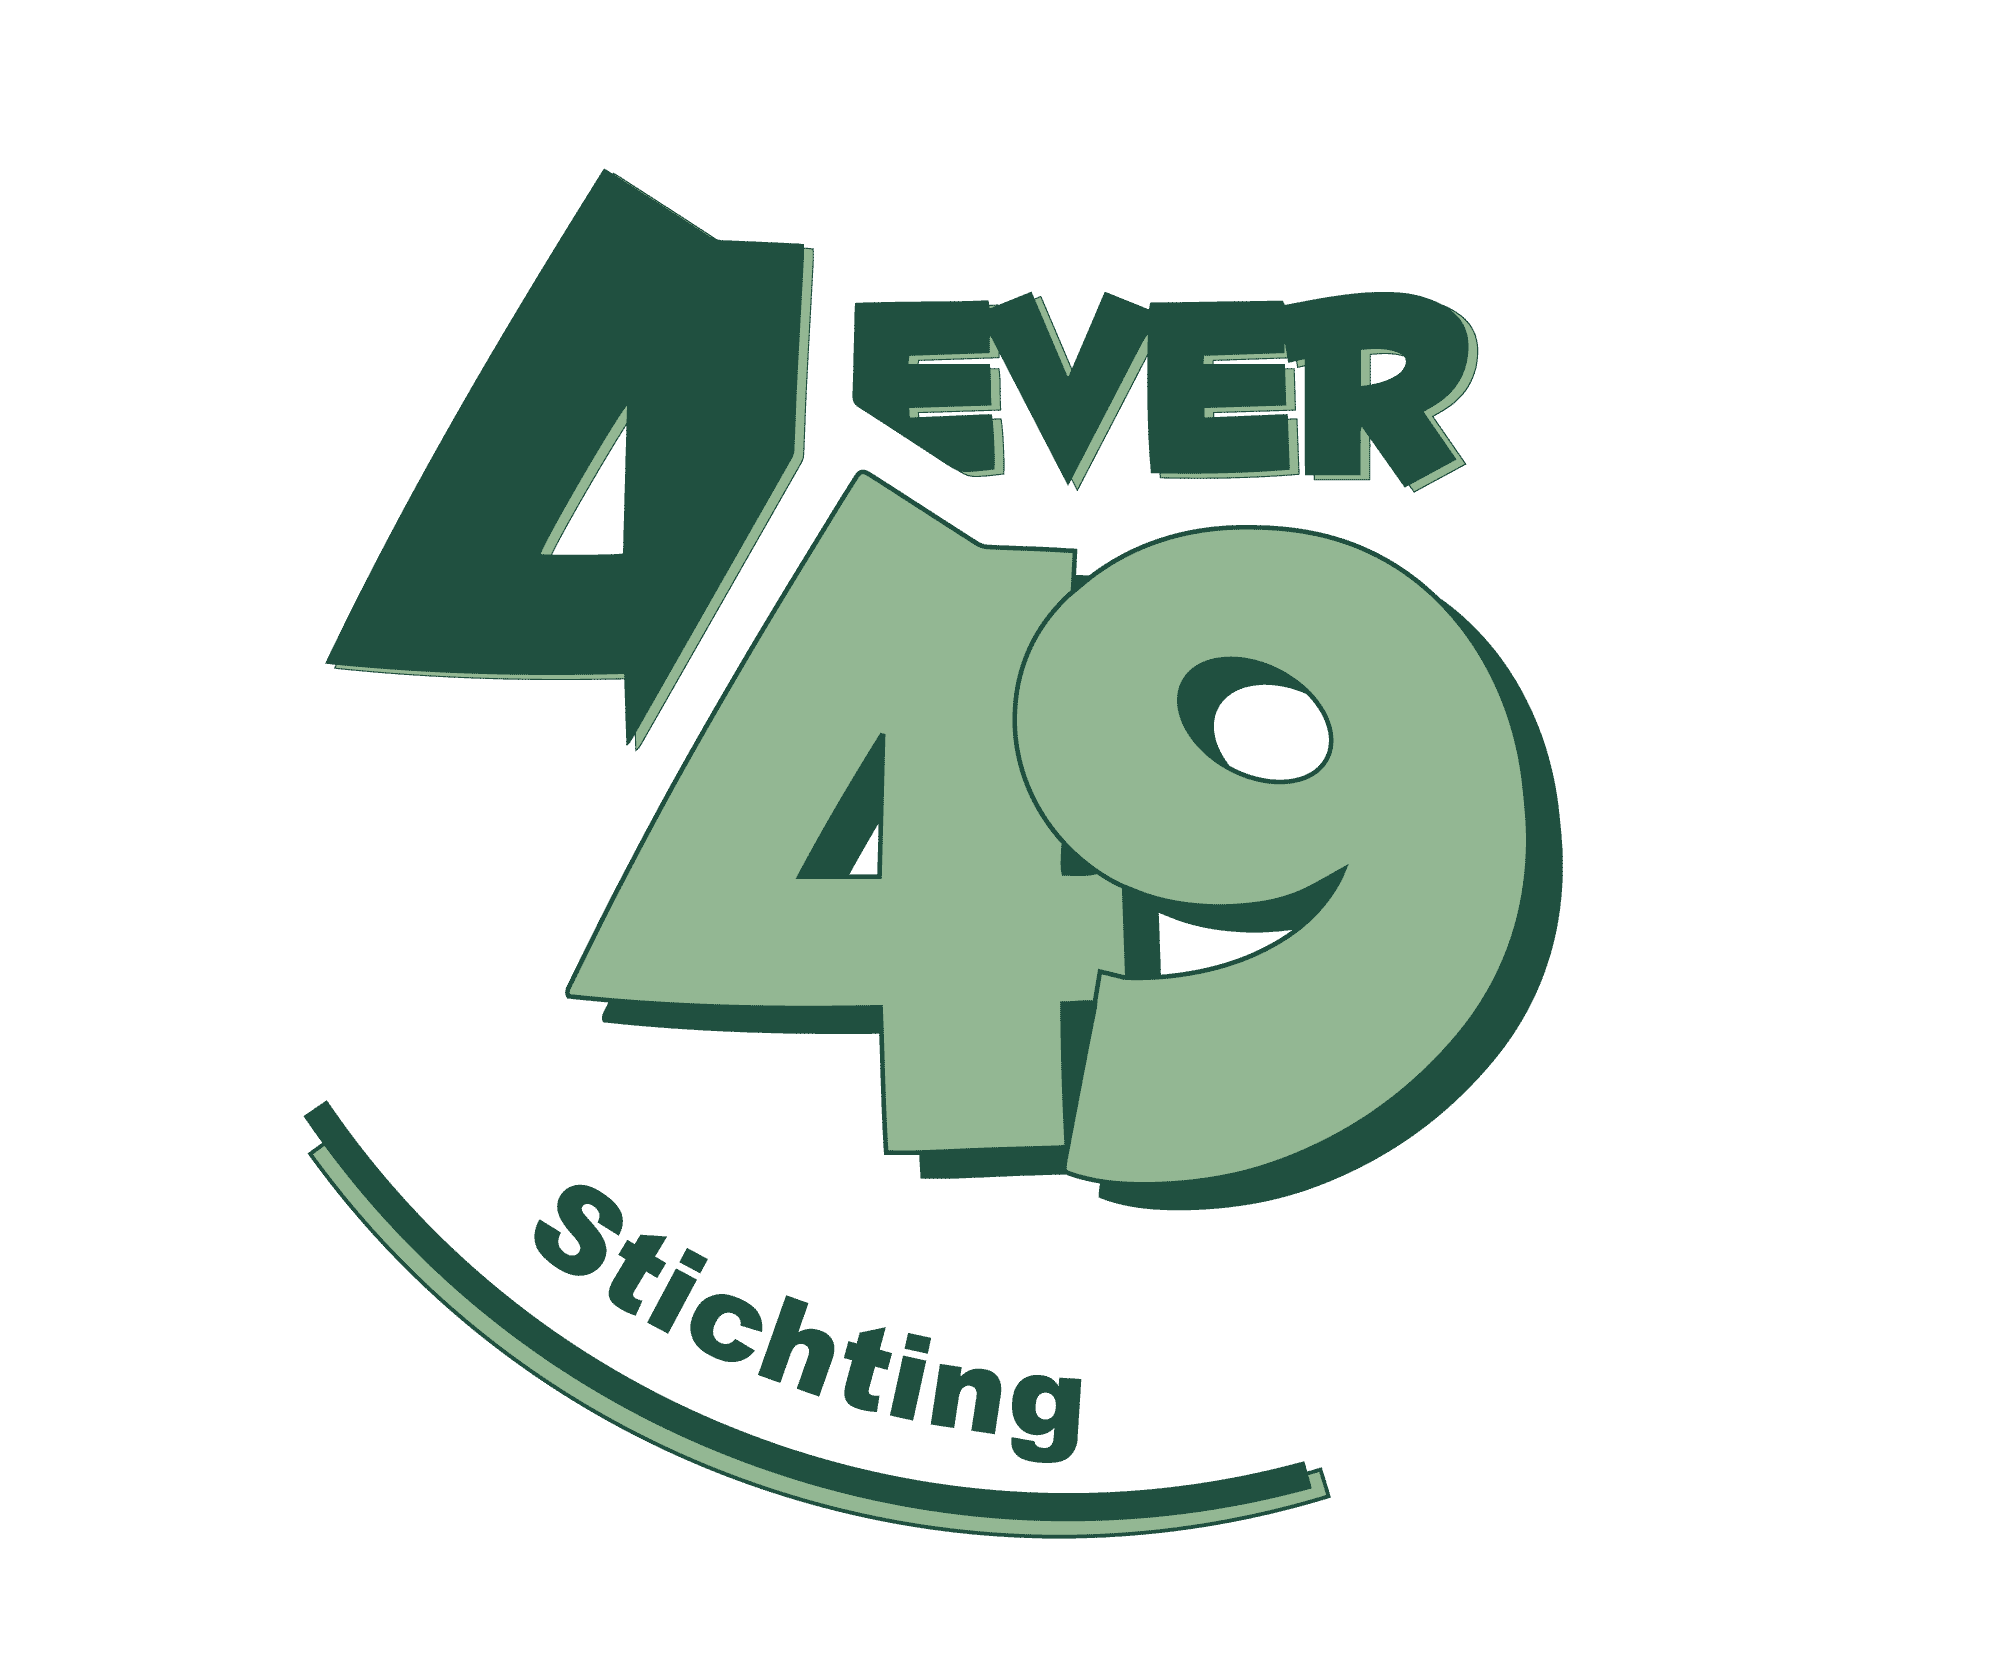 4ever49stichting-logo--tagline